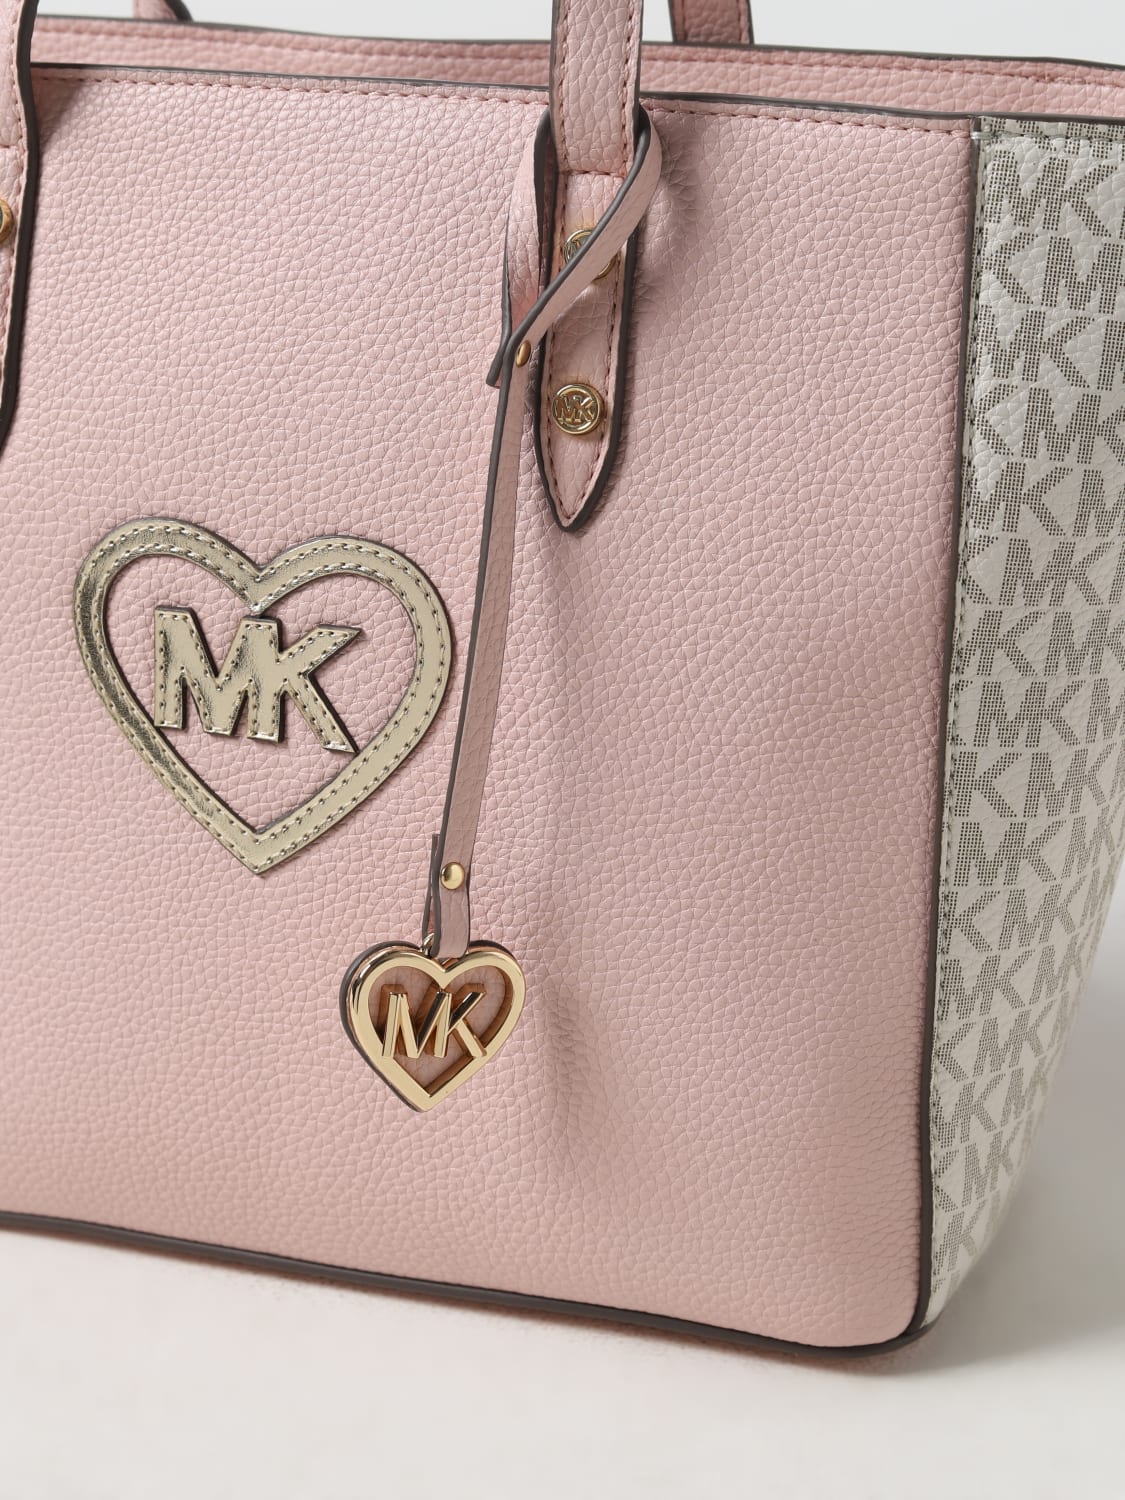 MICHAEL KORS: bag for kids - Pink  Michael Kors bag R10188 online